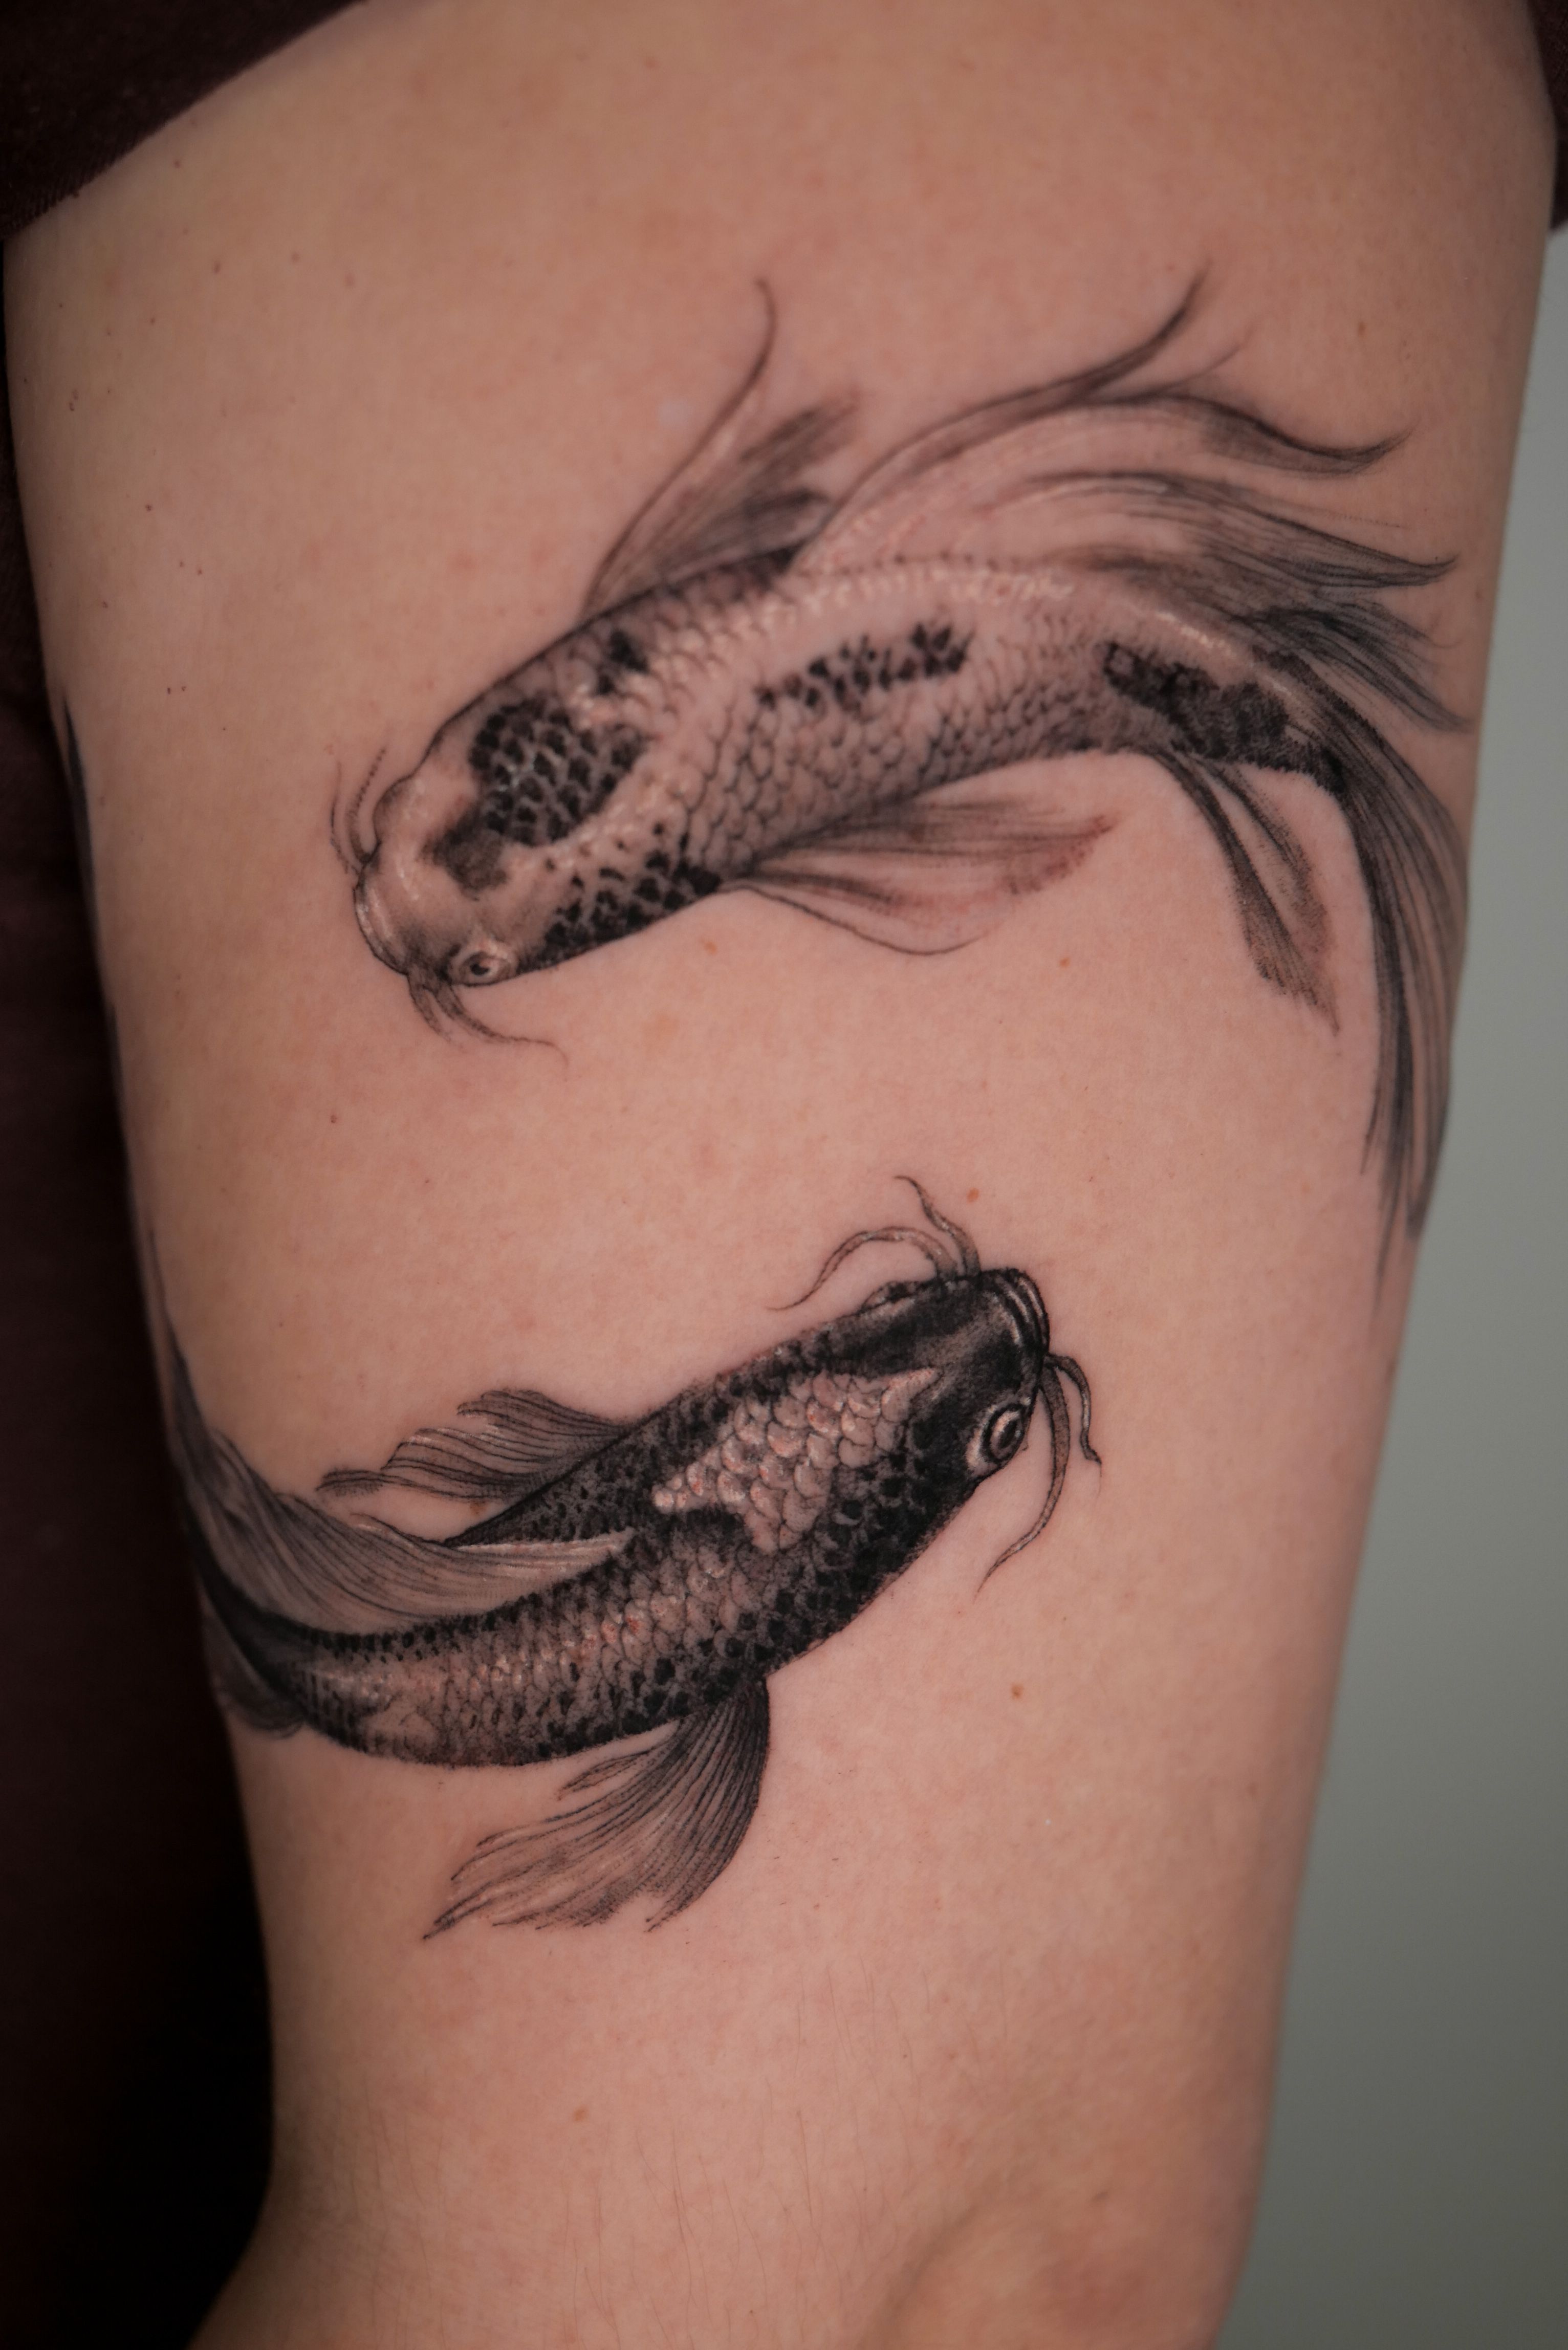 Carpe koi tattoo: 7.035 foto e immagini stock esenti da diritti d'autore  |Shutterstock